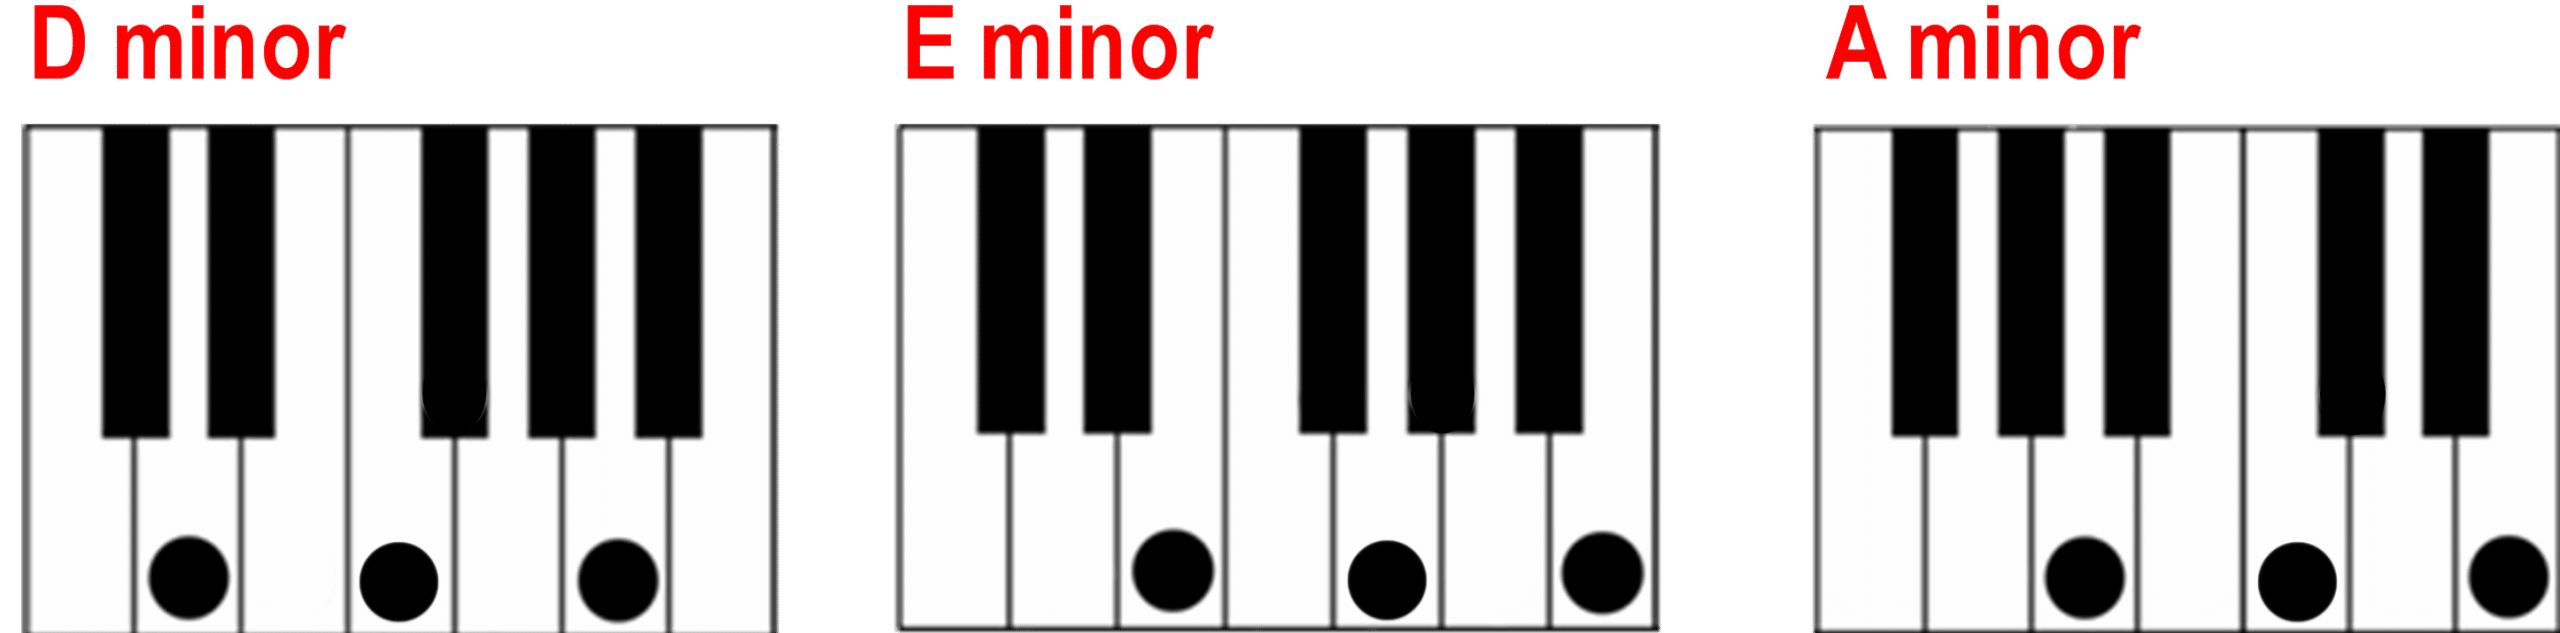 Minor Chords e1699660299376 - Unison